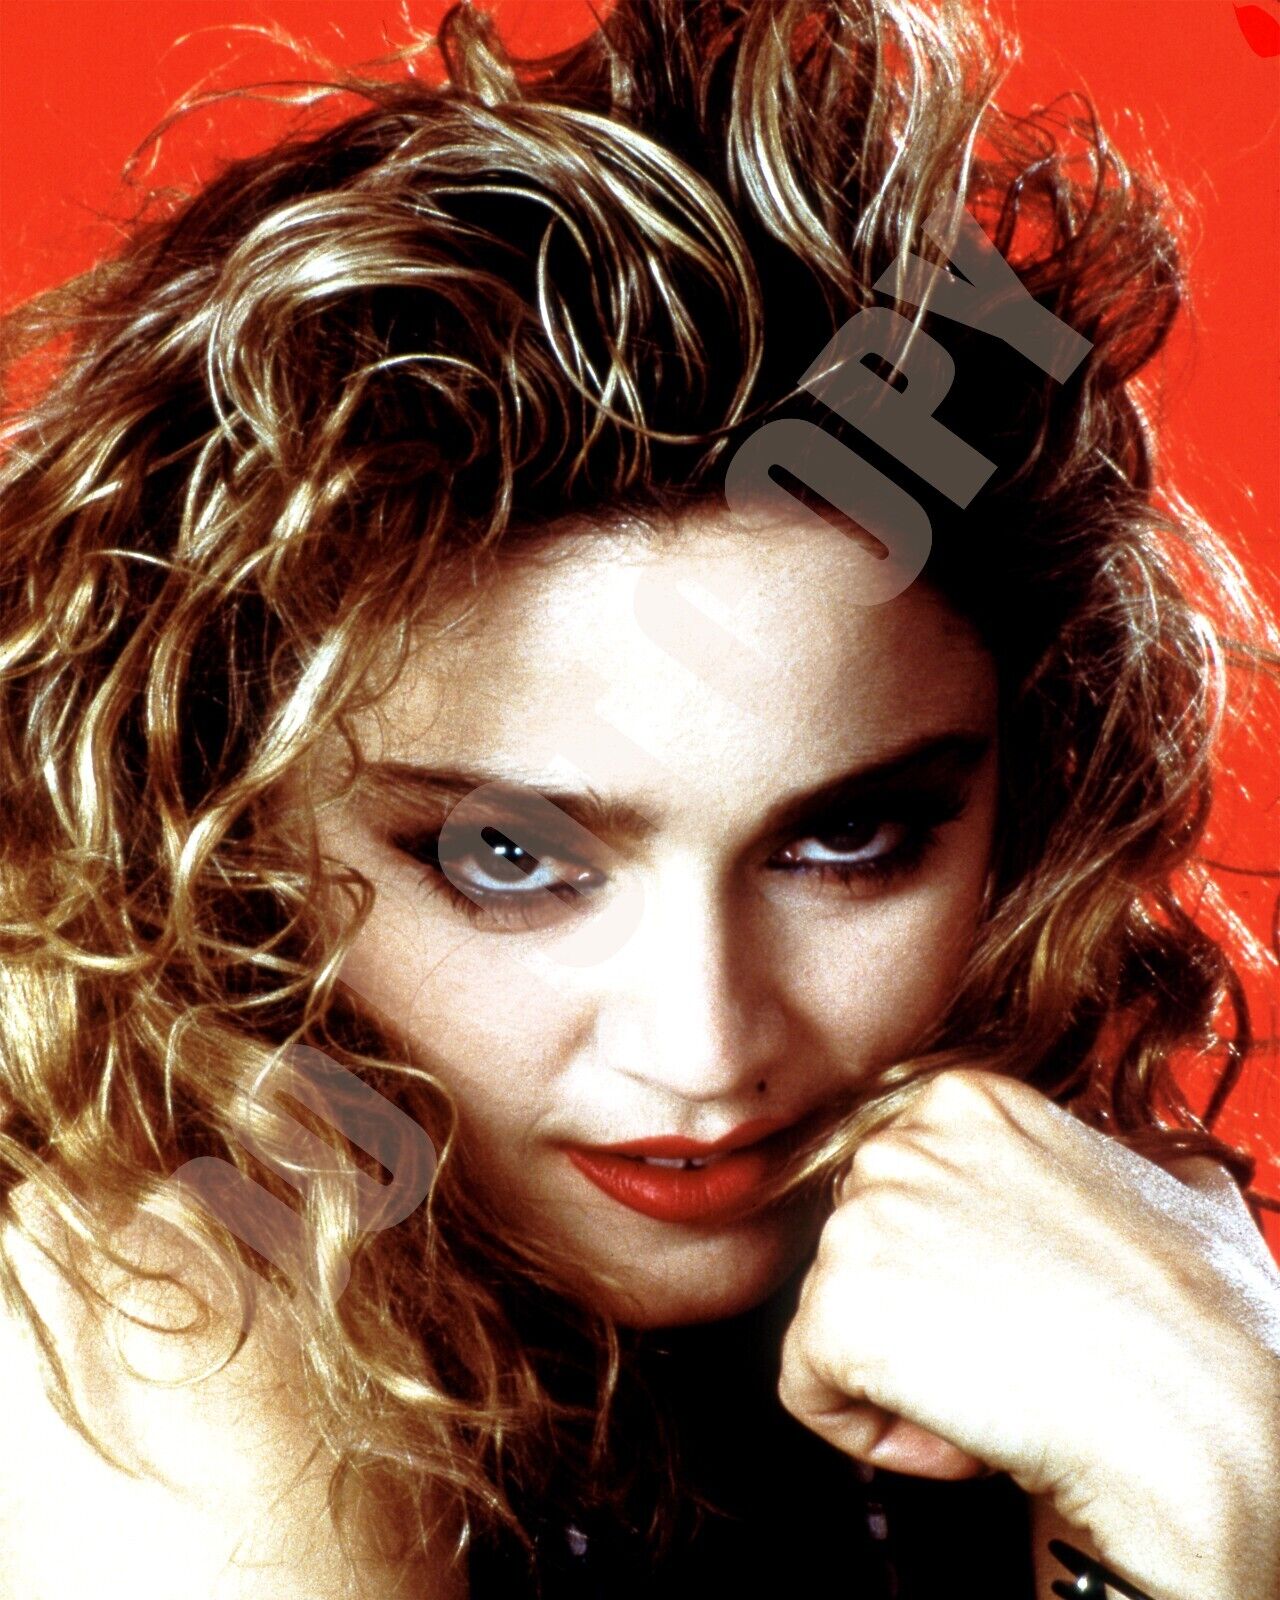 1980s Madonna Like A Virgin Sexy 8x10 Photo 🎤 FROM ORIGINAL NEGATIVE 🎤